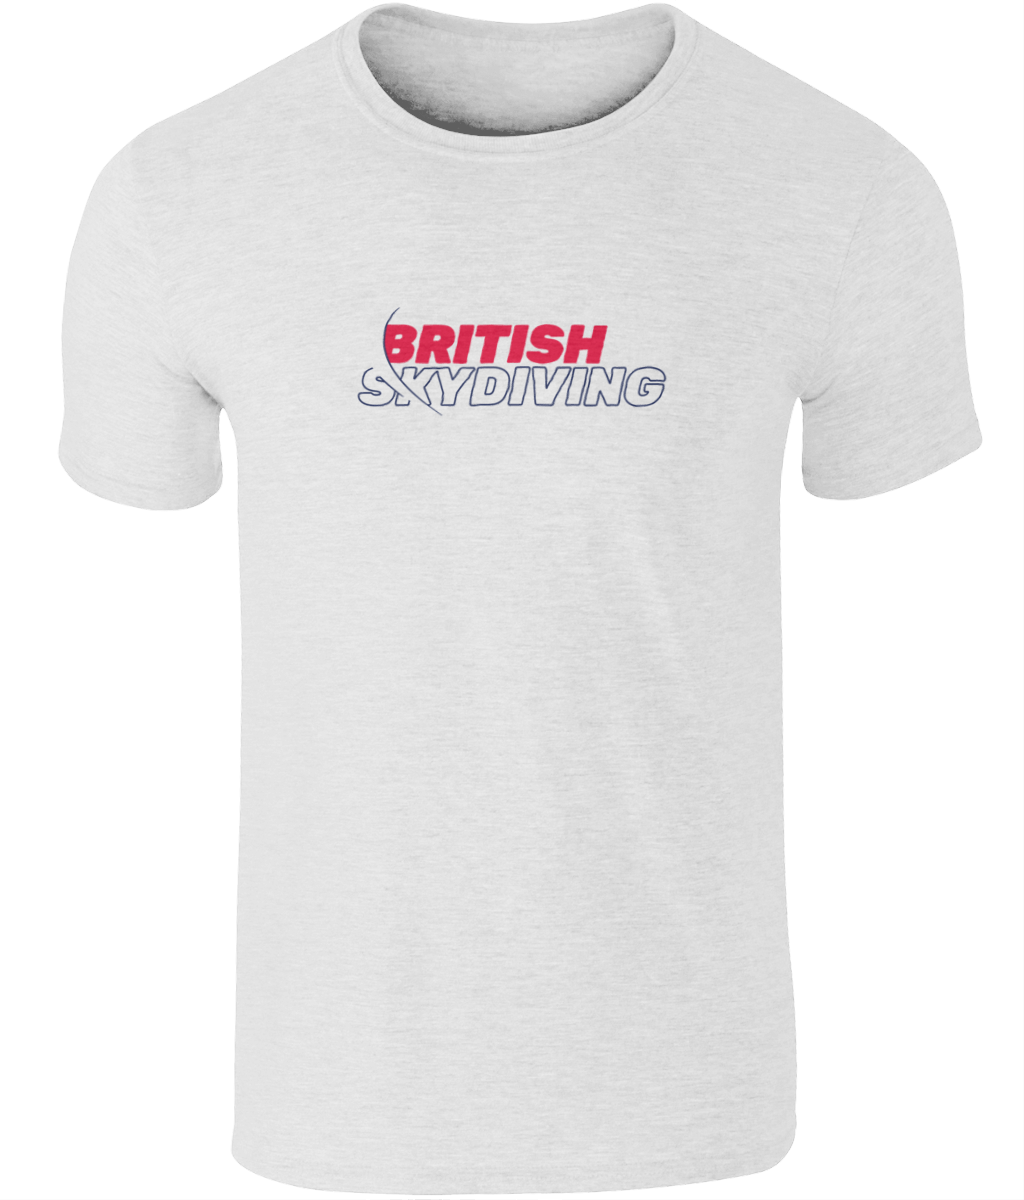 British Skydiving Unisex T-Shirt